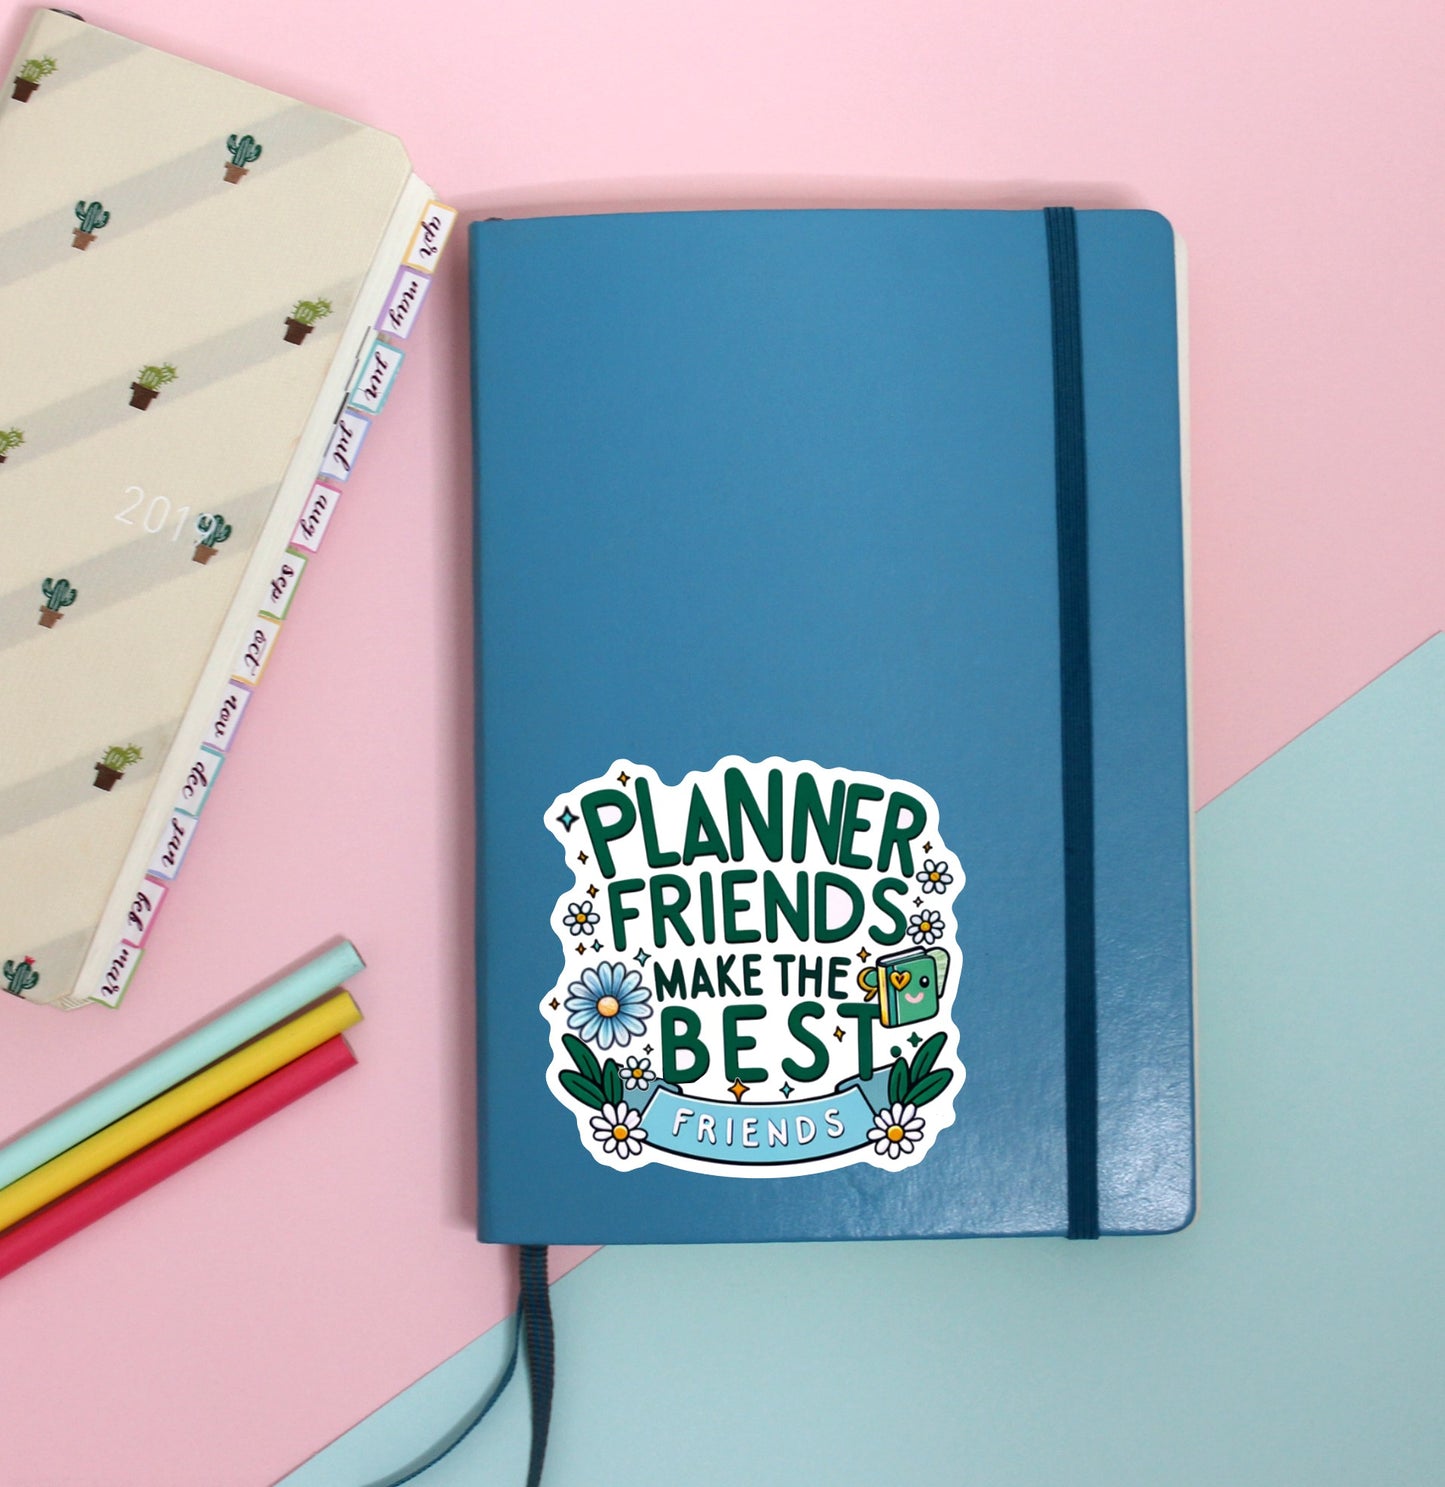 Planner Friends Make The Best Friends || Green and Blue, Cute Vinyl Decal